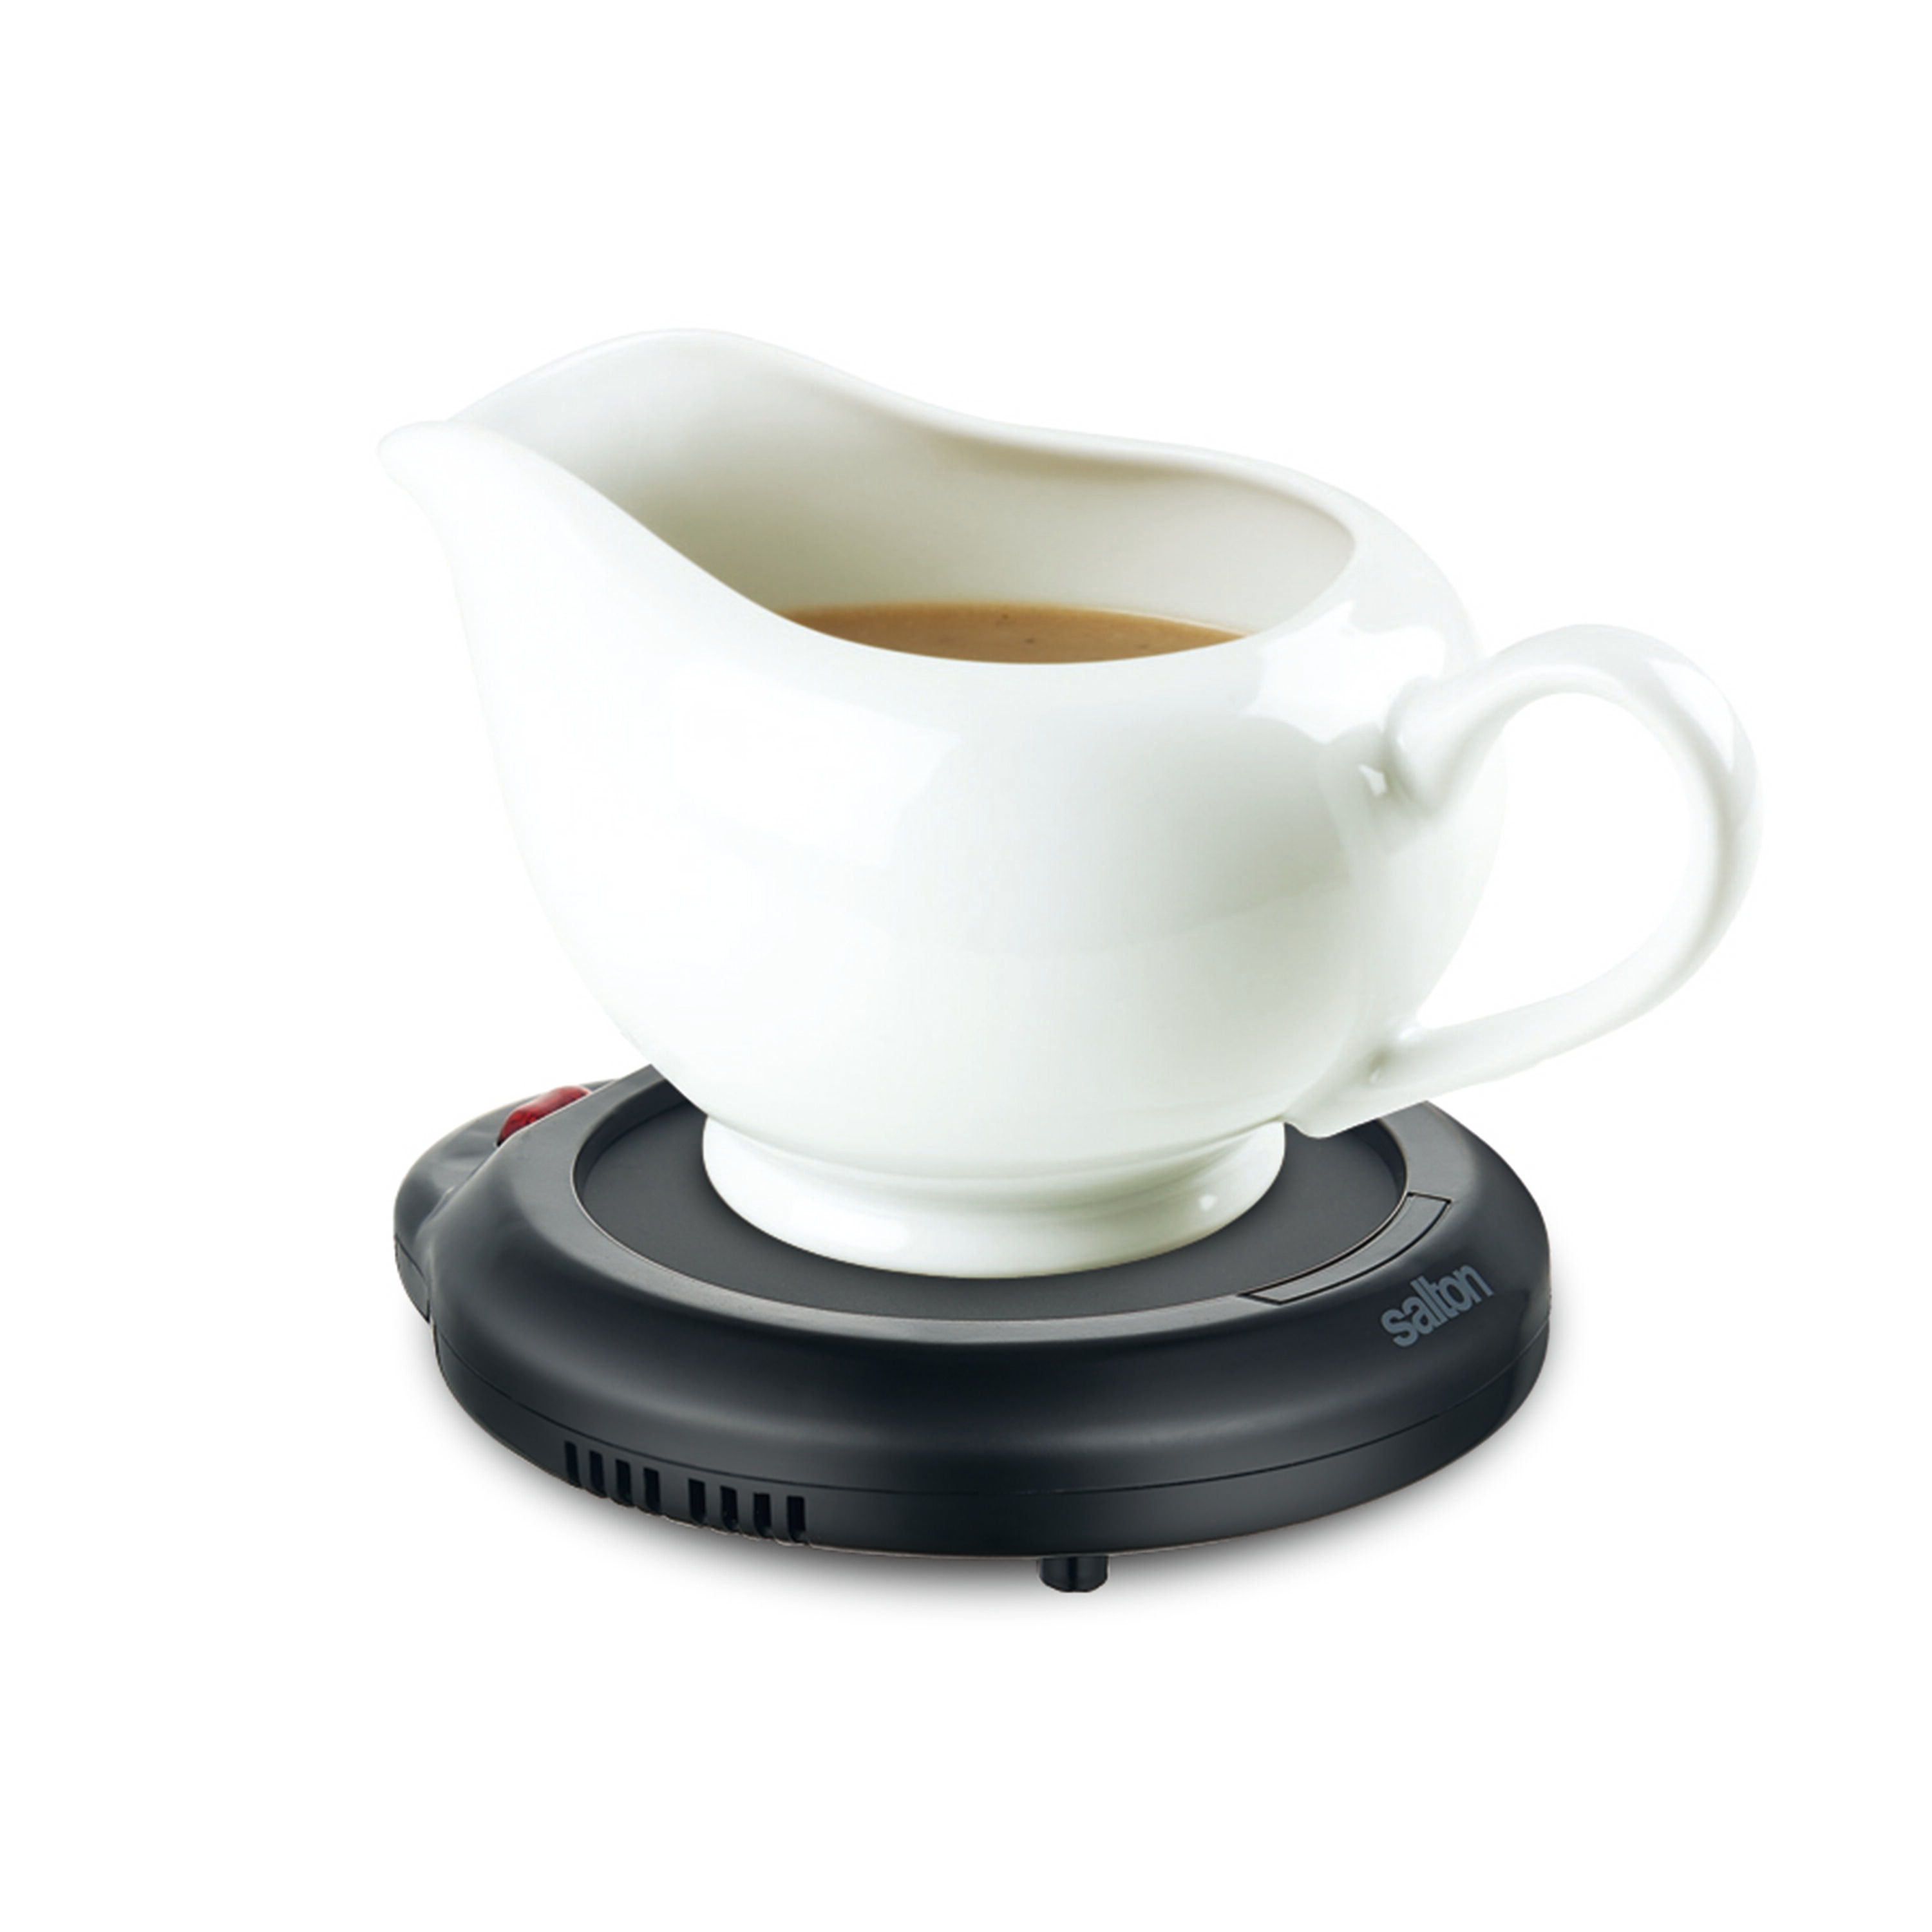 COSORI Coffee Mug Warmer & Mug Set, Beverage Cup Warmer for Desk Home  Office Use, Coffee gifts, Electric 24 Watt, Touch Tech & L